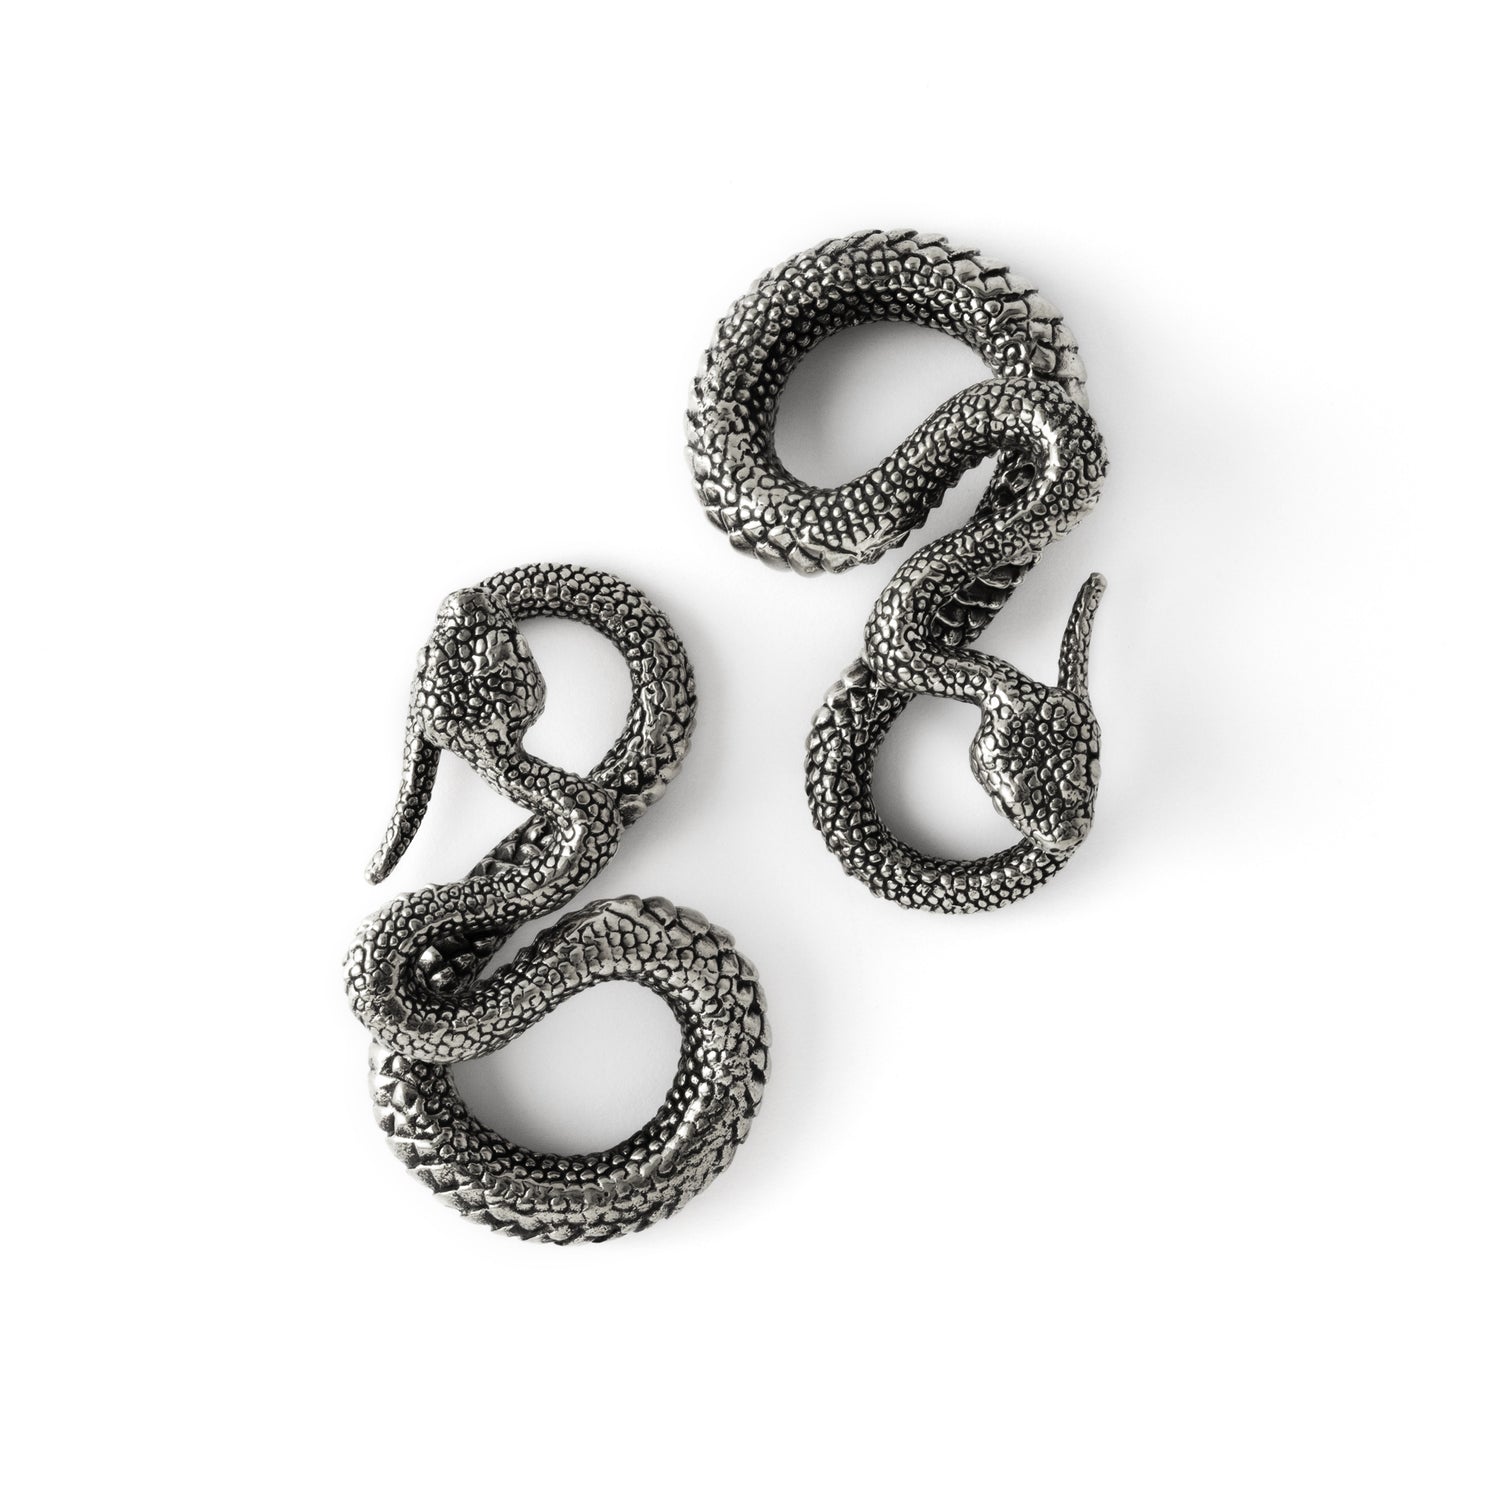 pair of silver brass snake ear weights hangers in infinity shape